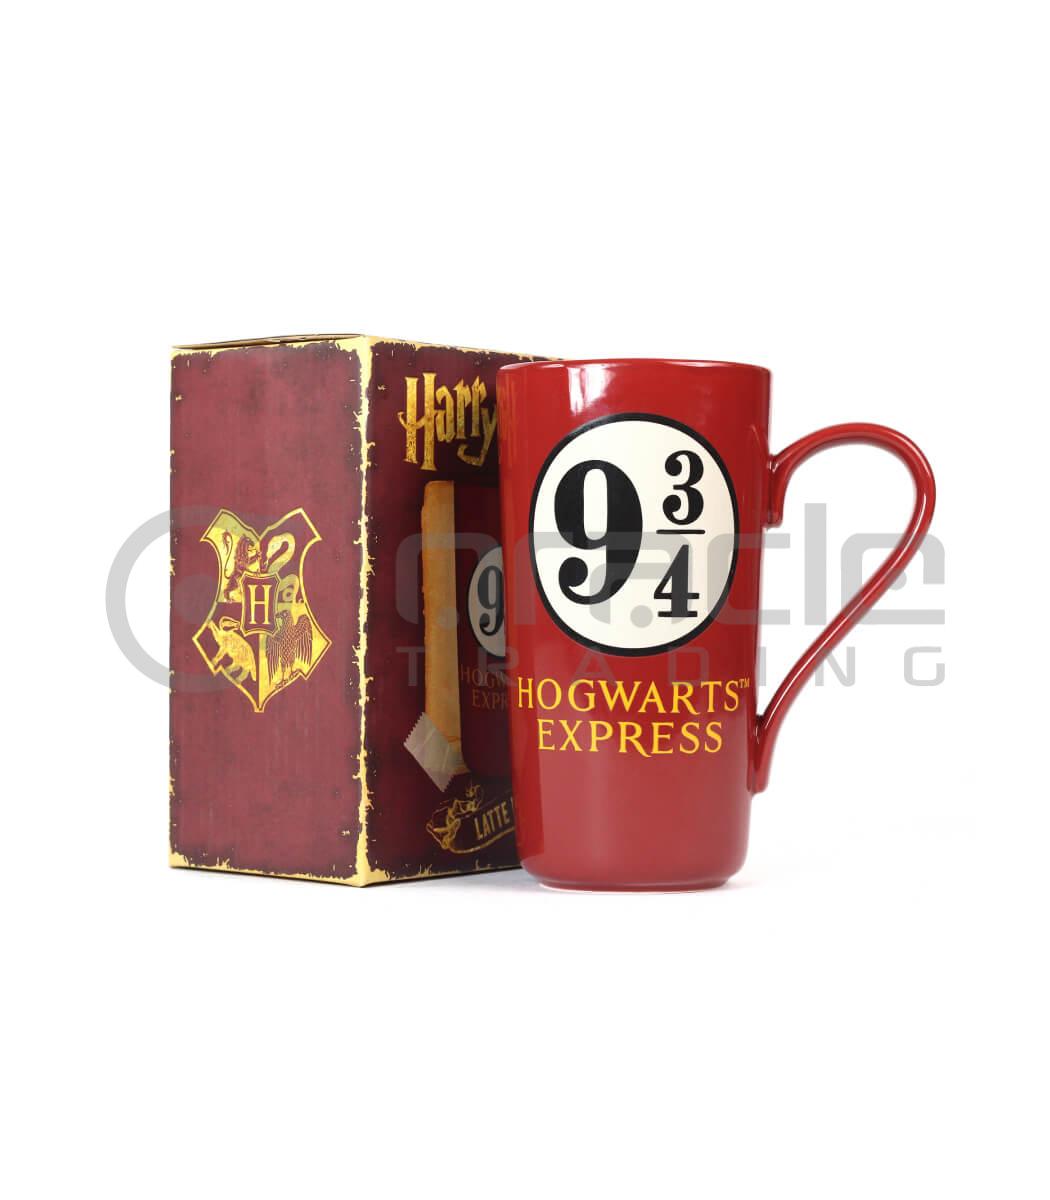 Tall Ravenclaw Mug - Boutique Harry Potter